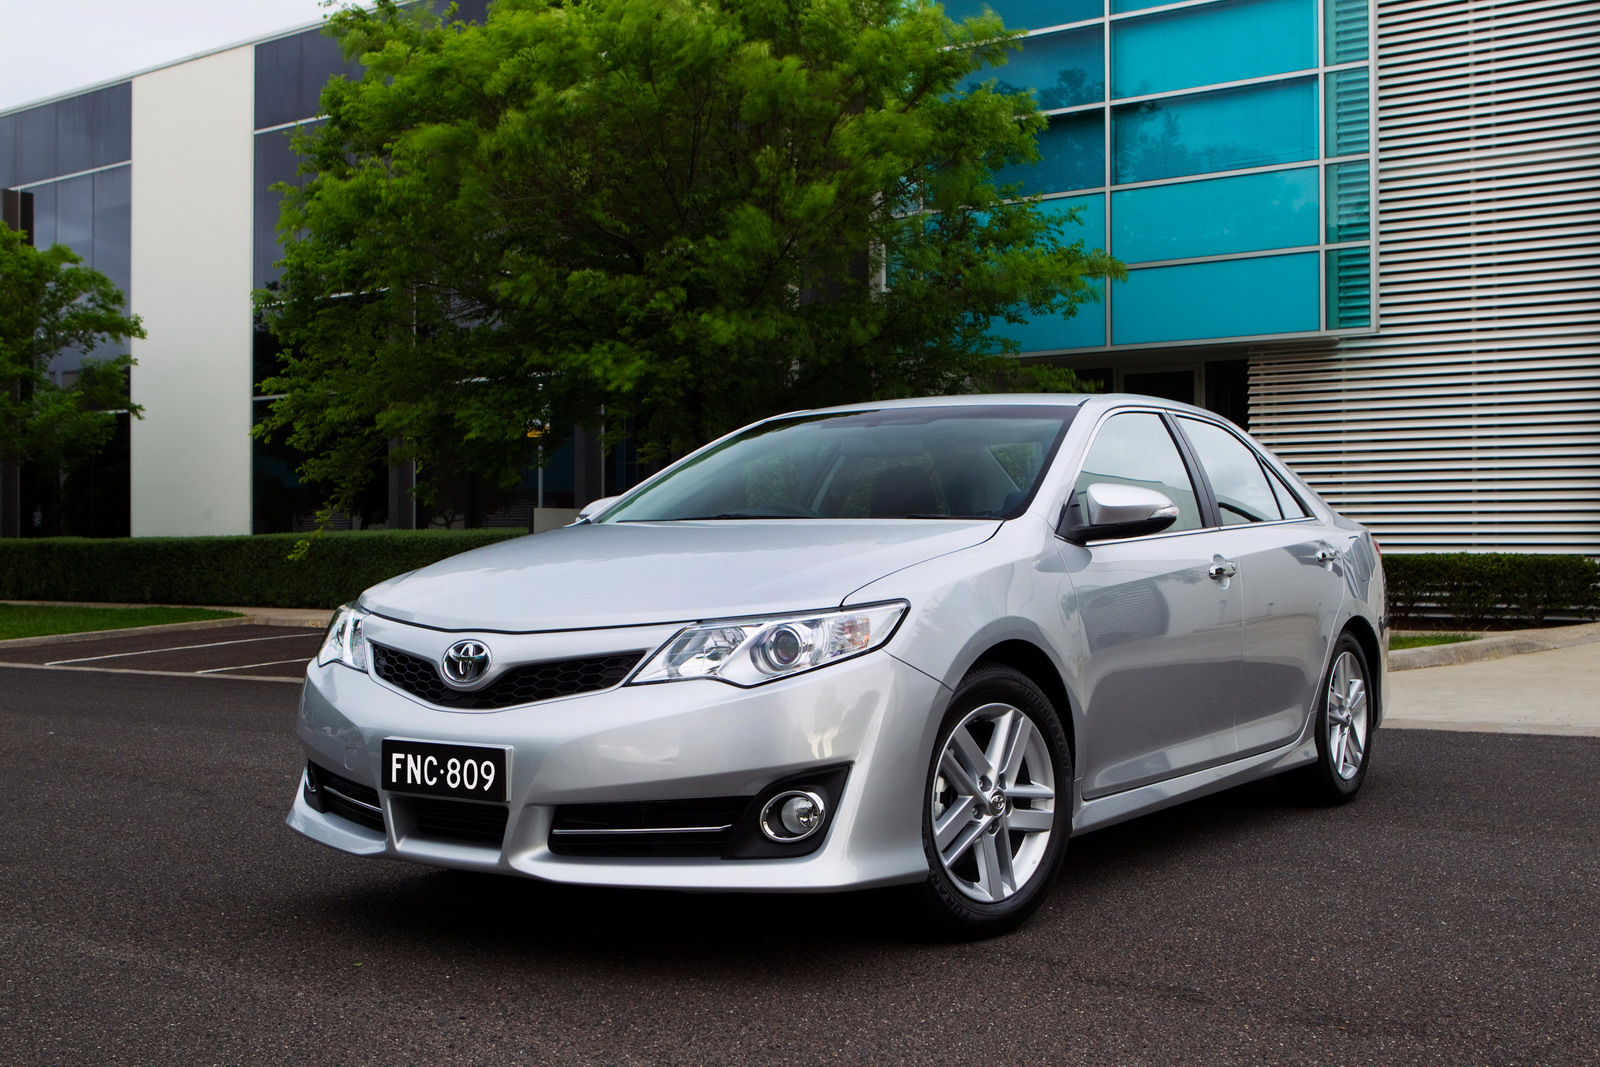 2012 Toyota Camry for Australia Unveiled - autoevolution